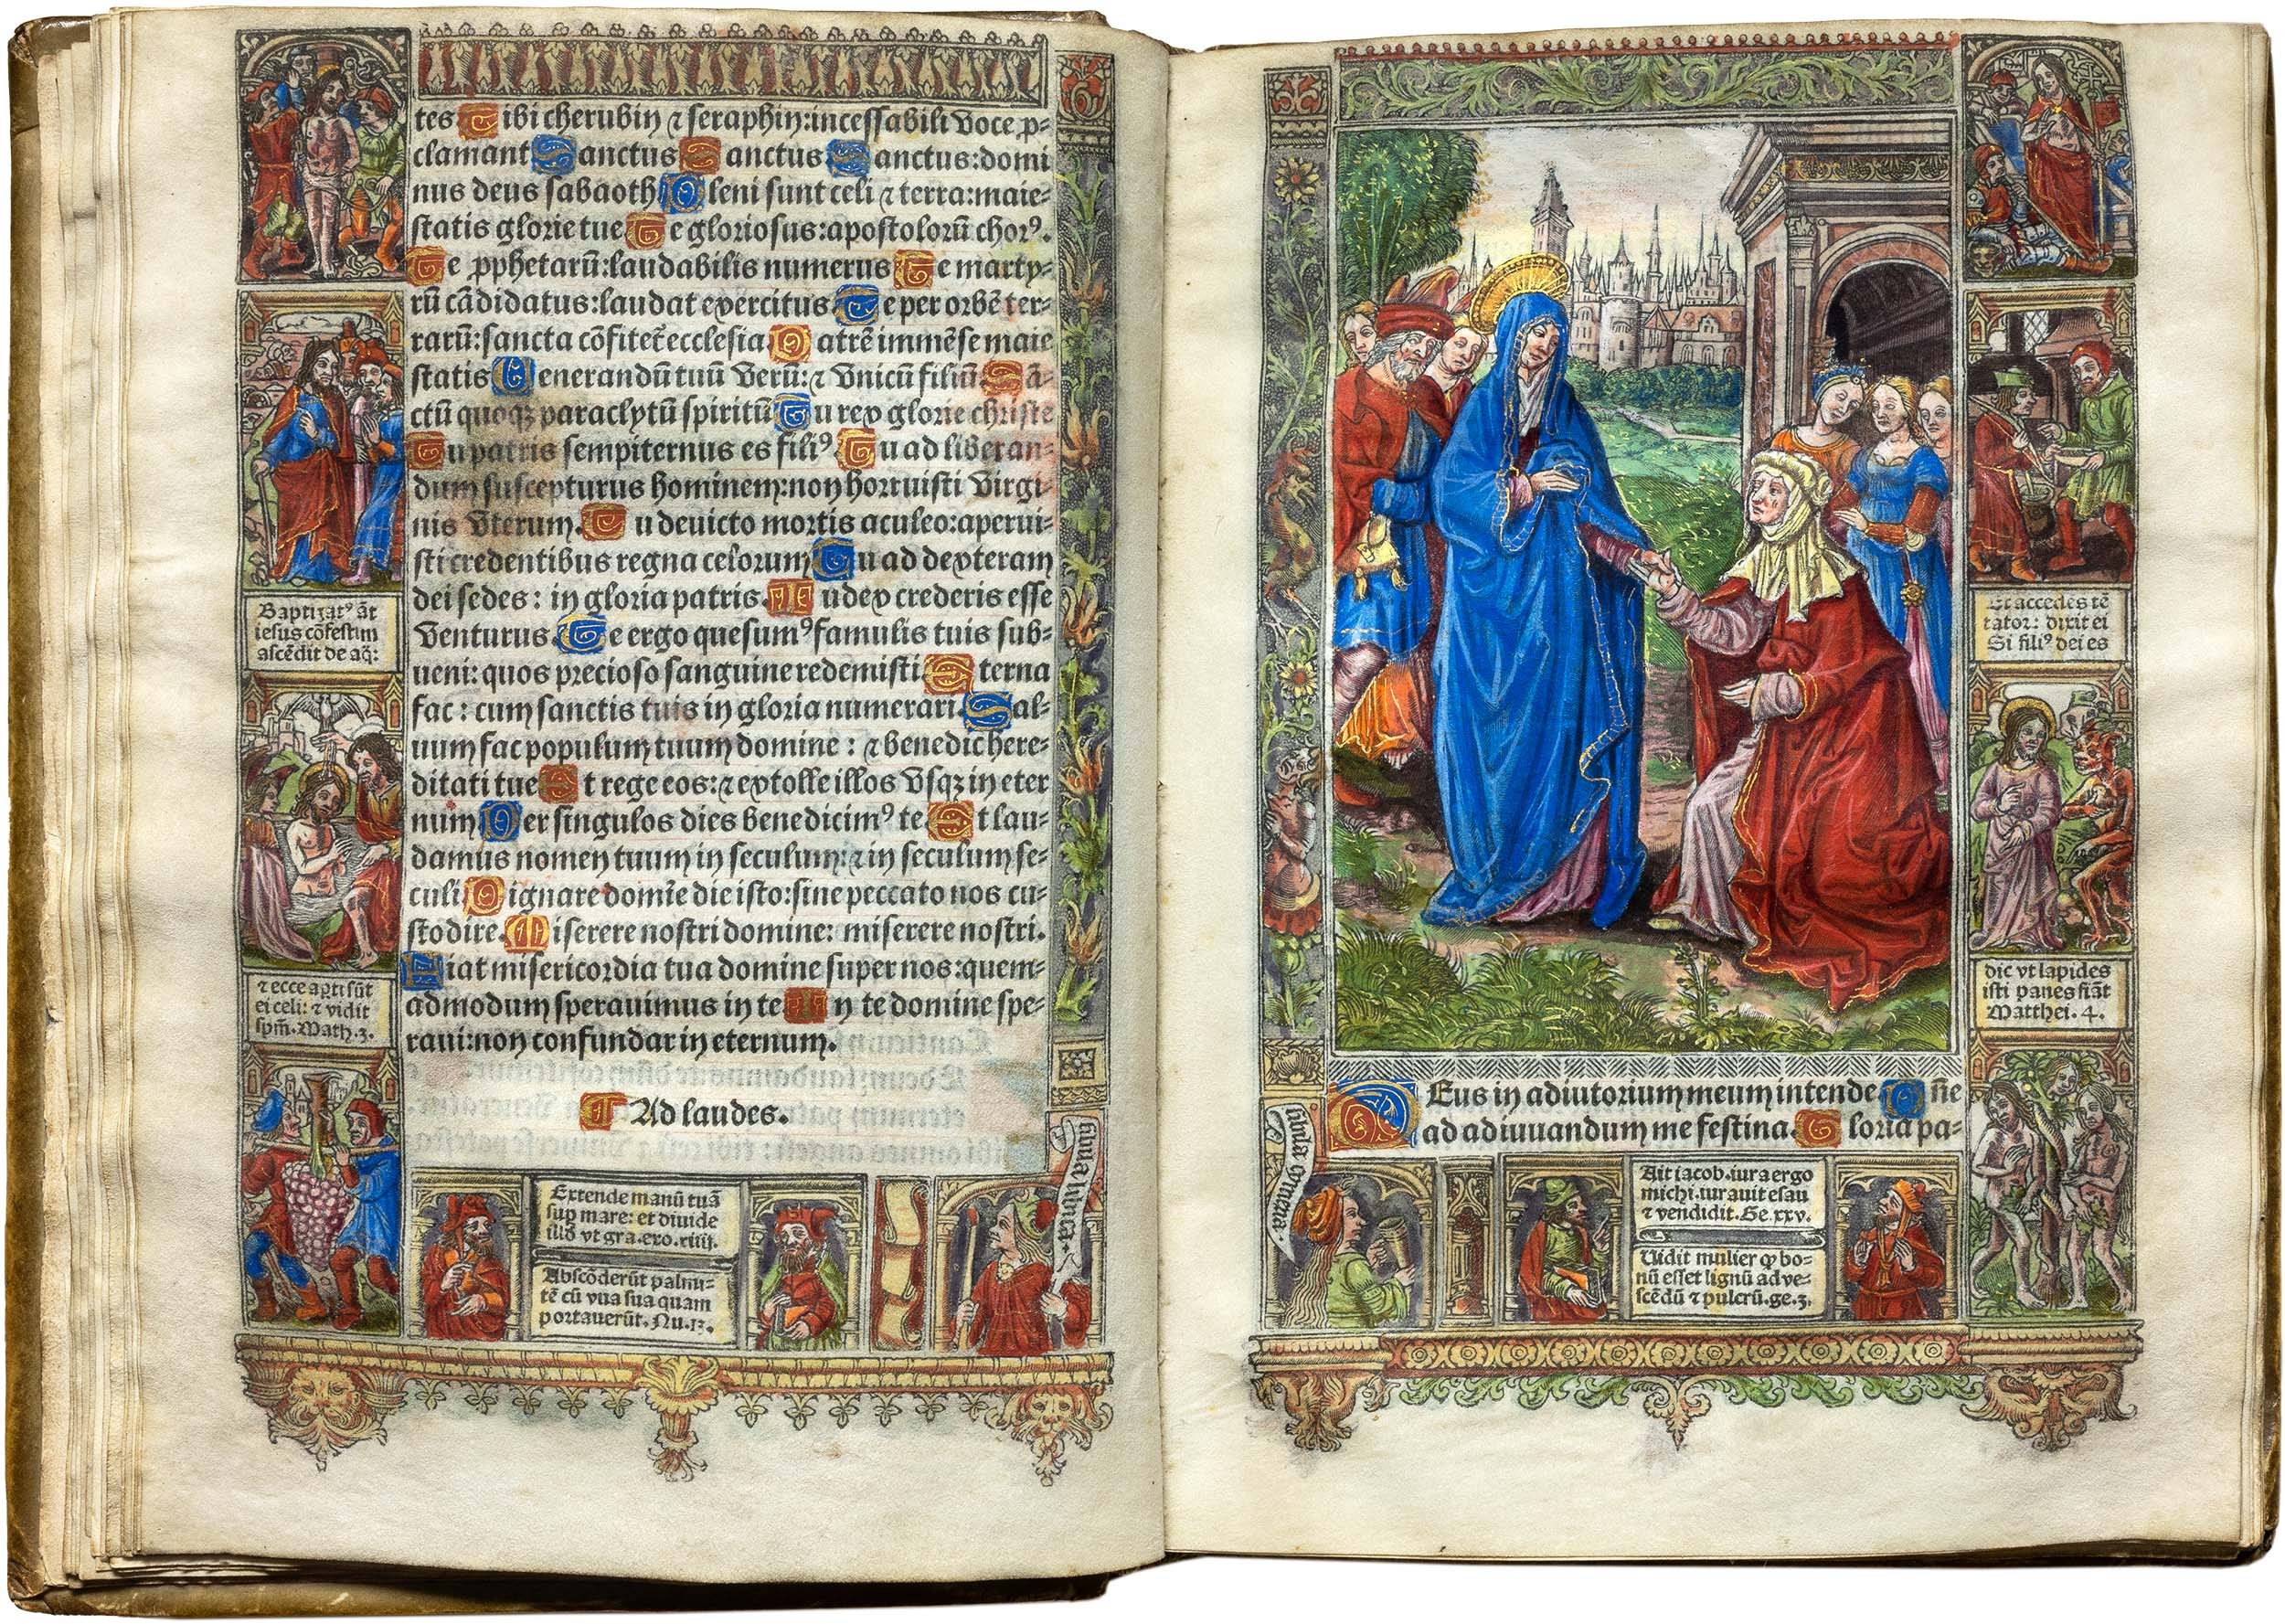 Horae-bmv-31-march-1511-kerver-printed-book-of-hours-illuminated-copy-vellum-25.jpg